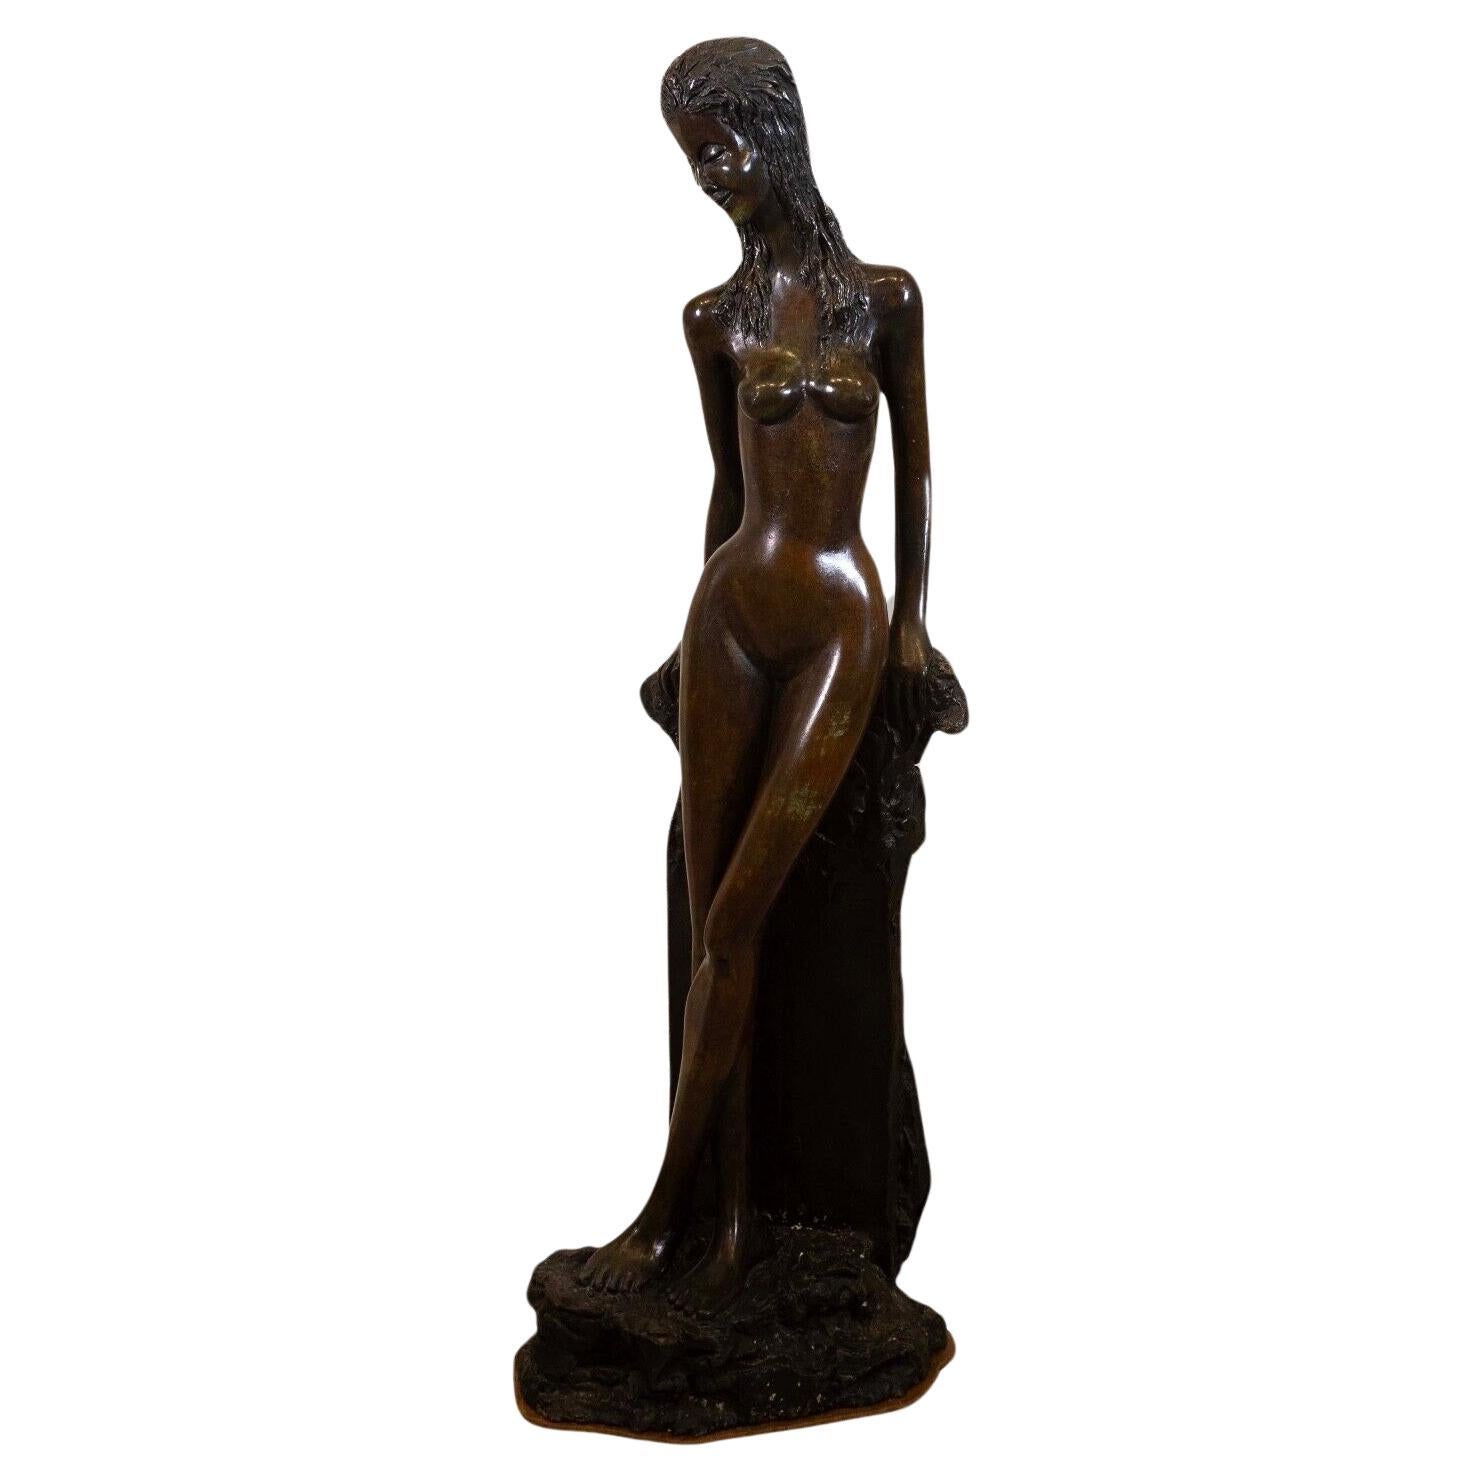 Art Deco Nouveau Moderne weibliche Akt-Bronze-Deko-Figurative figurative Skulptur